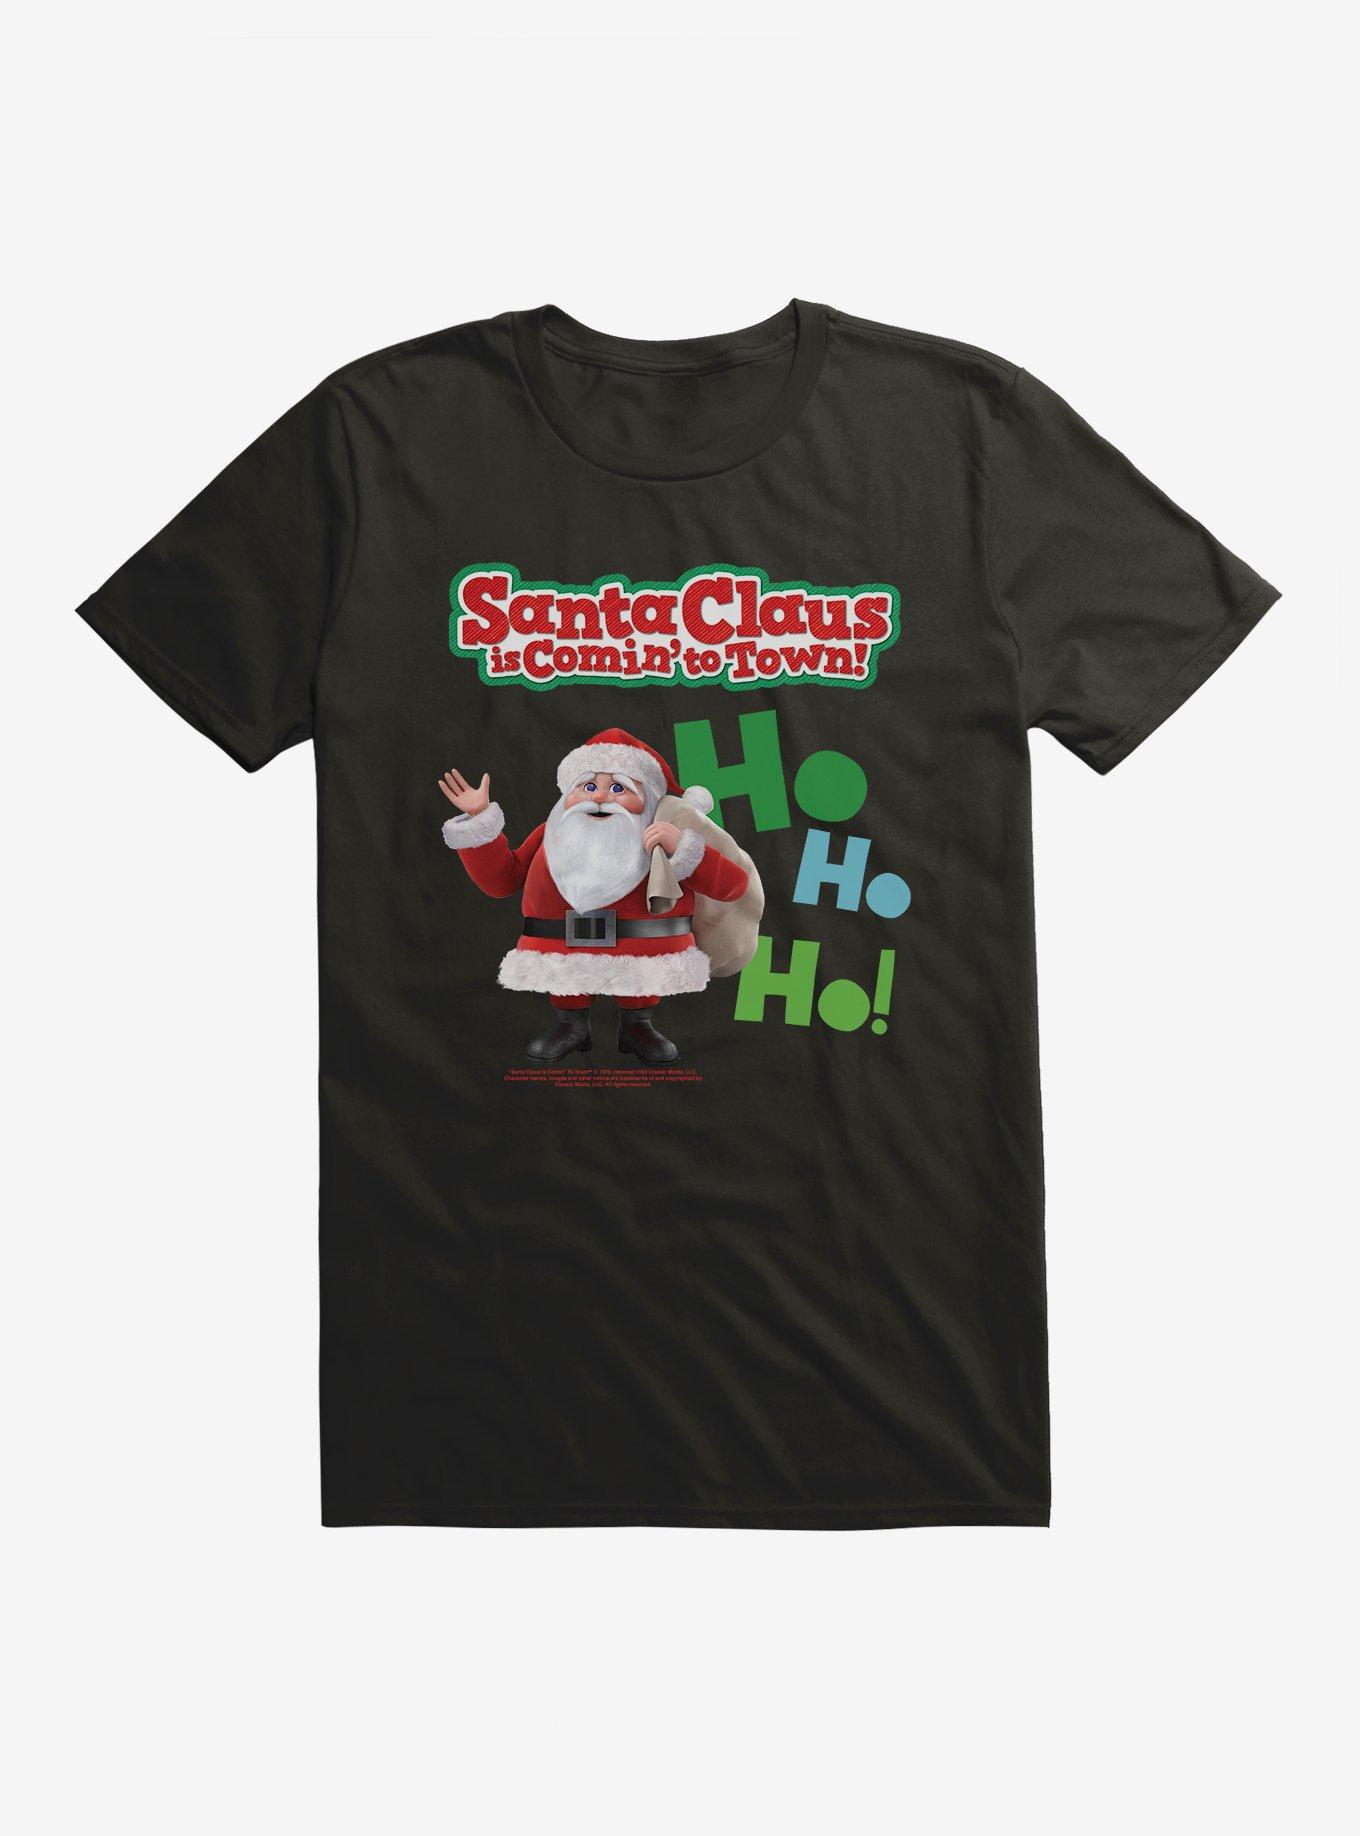 Santa Claus Is Comin' To Town! Ho Ho! T-Shirt